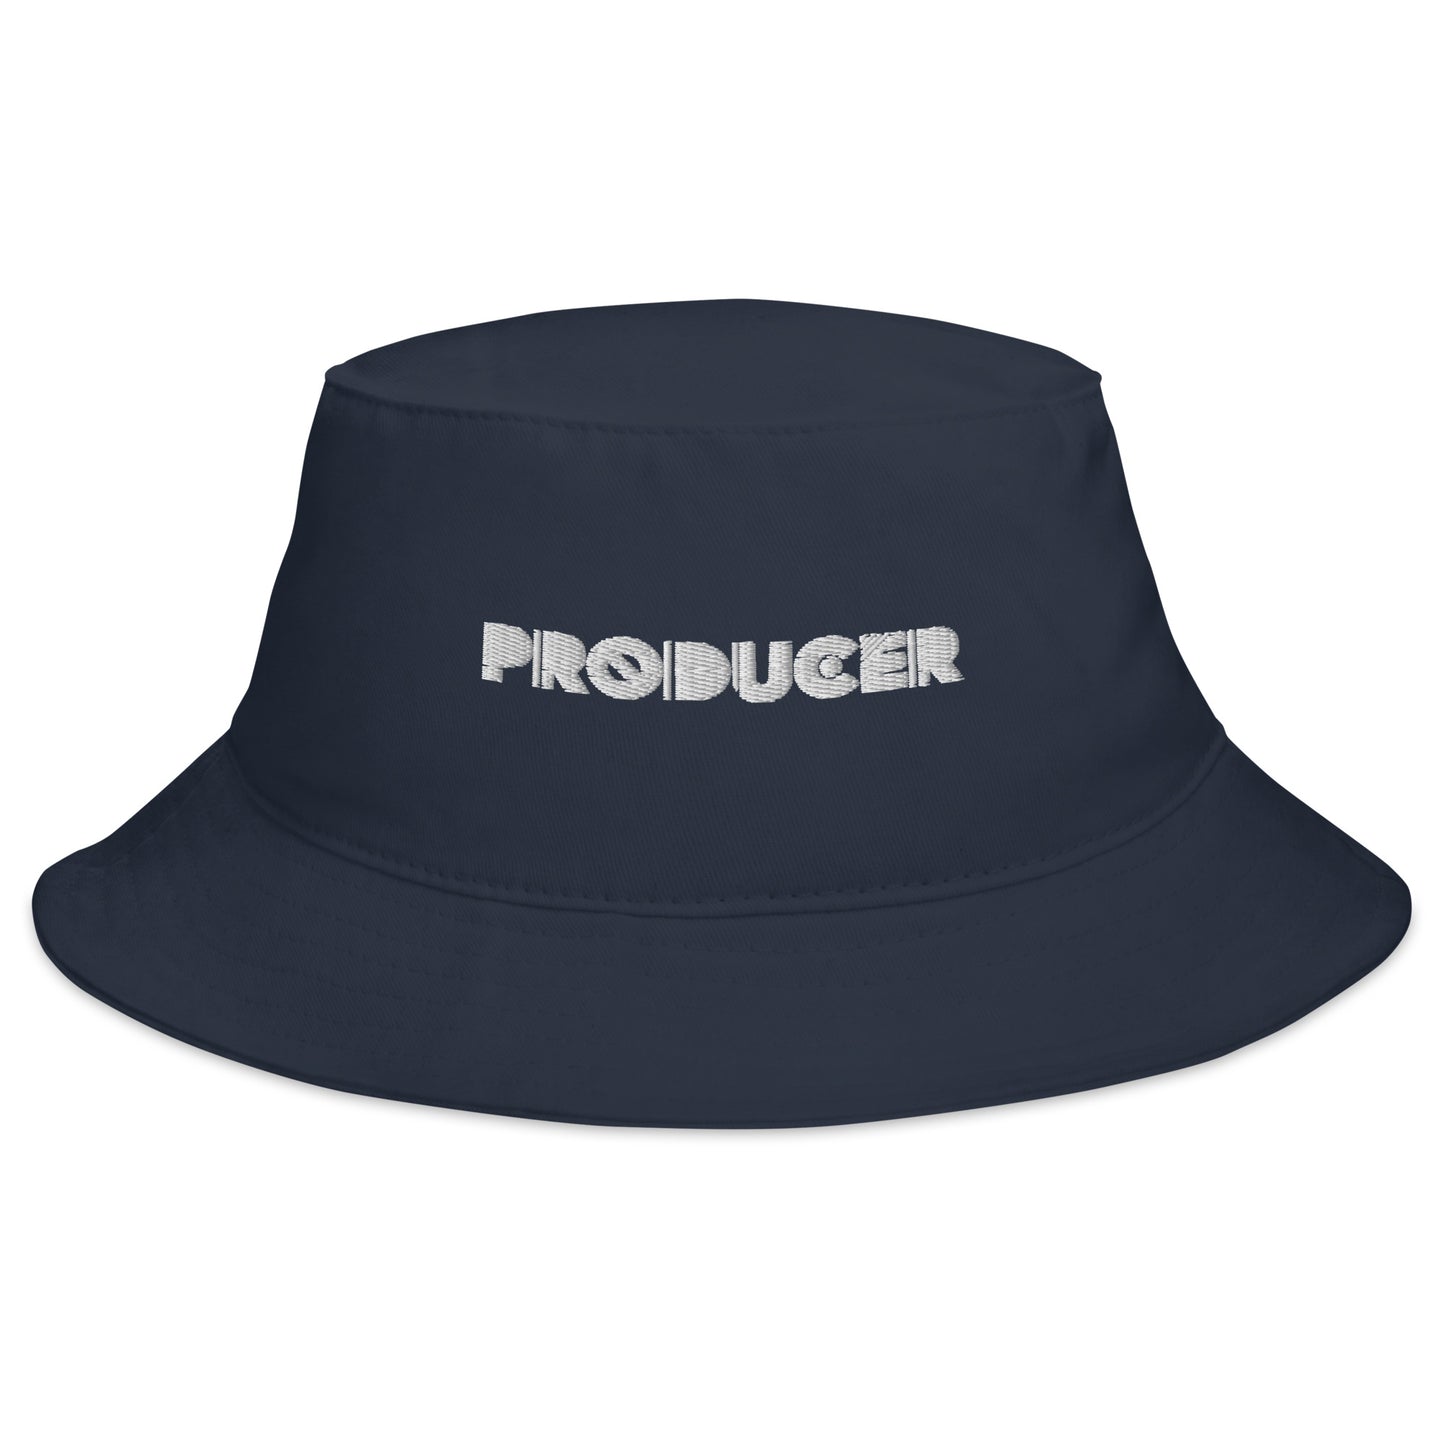 Producer Bucket Hat